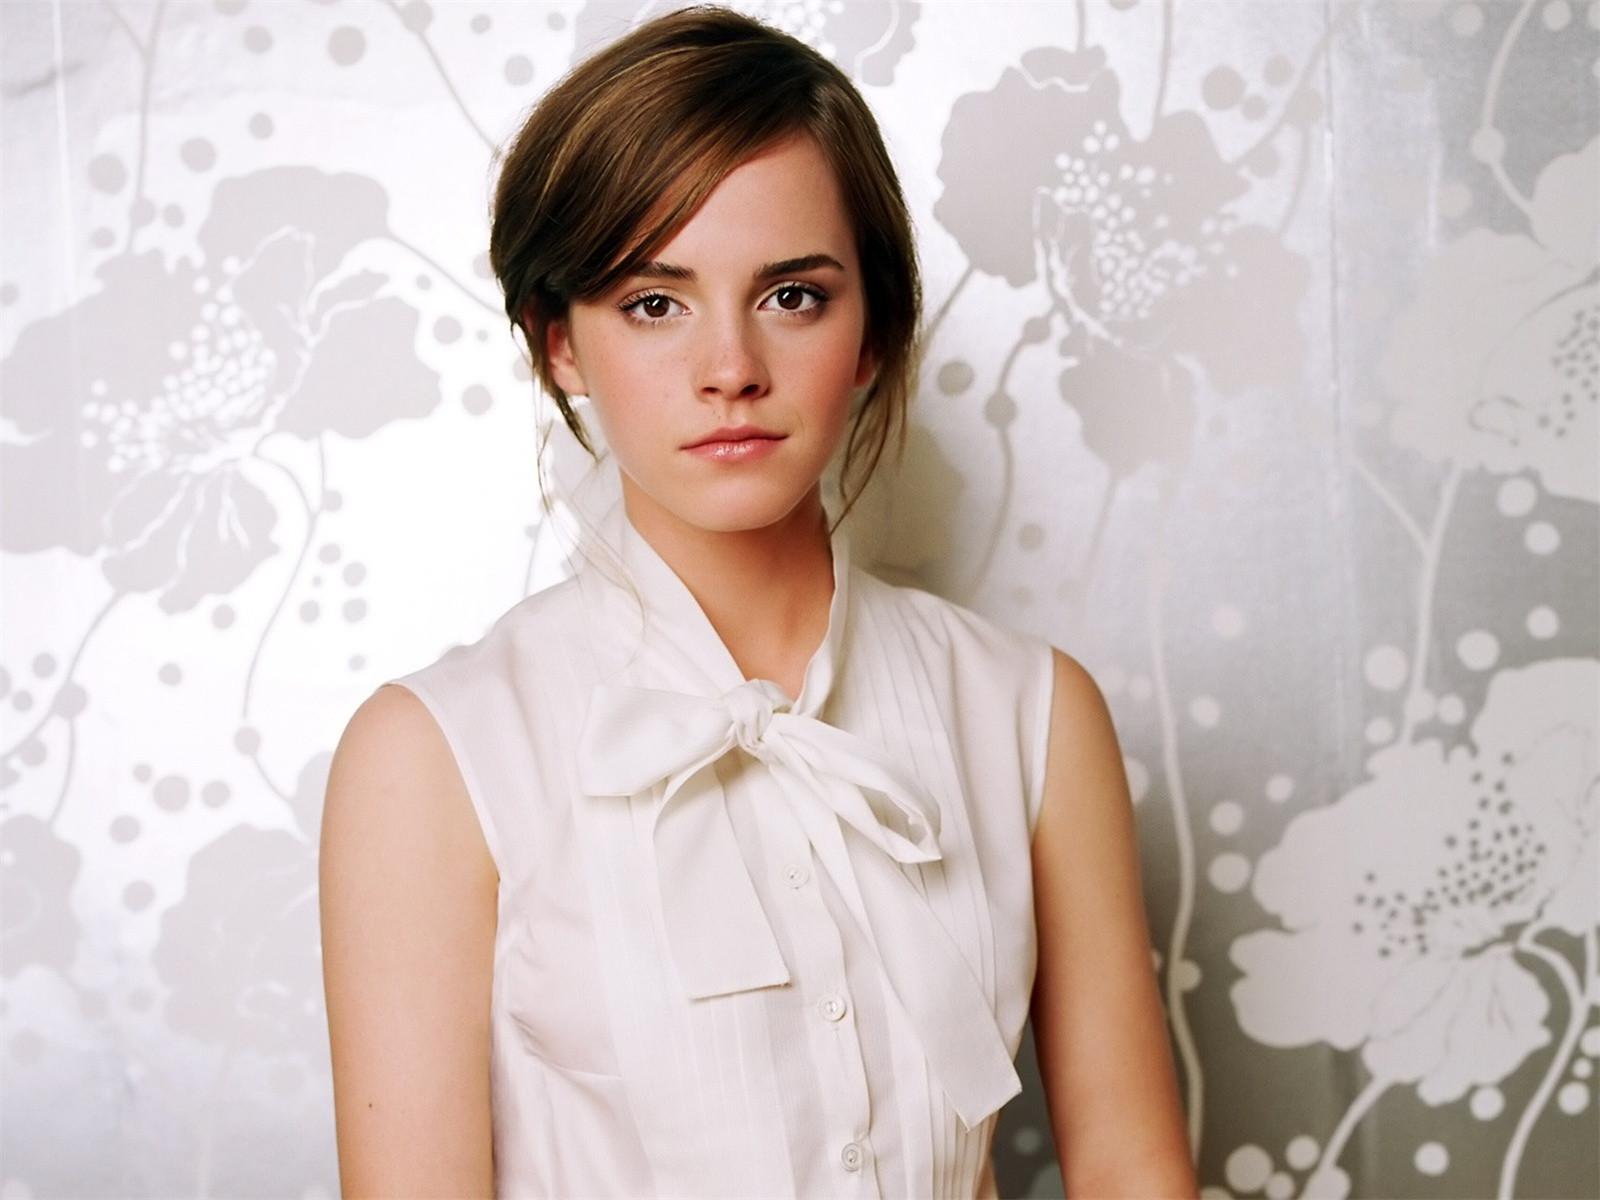 Emma Watson white shirt wallpaper. Emma Watson white shirt